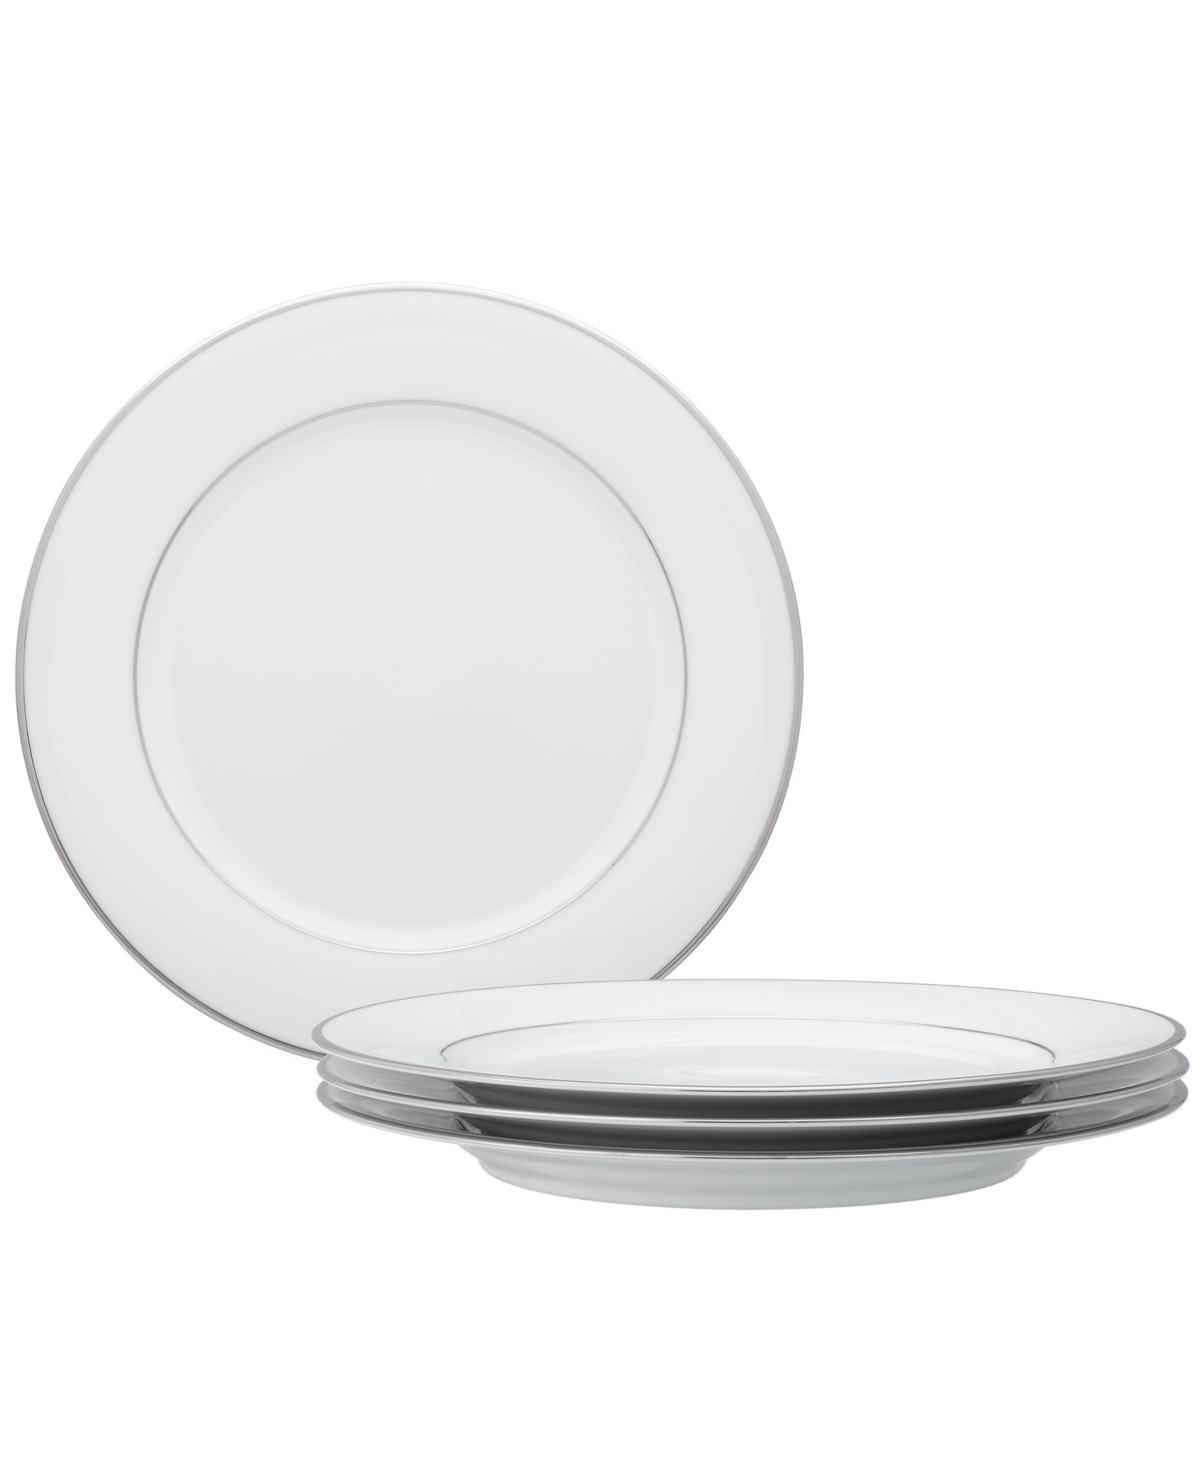 Noritake Spectrum Set Of 4 Dinner Plates, Service For 4 In White